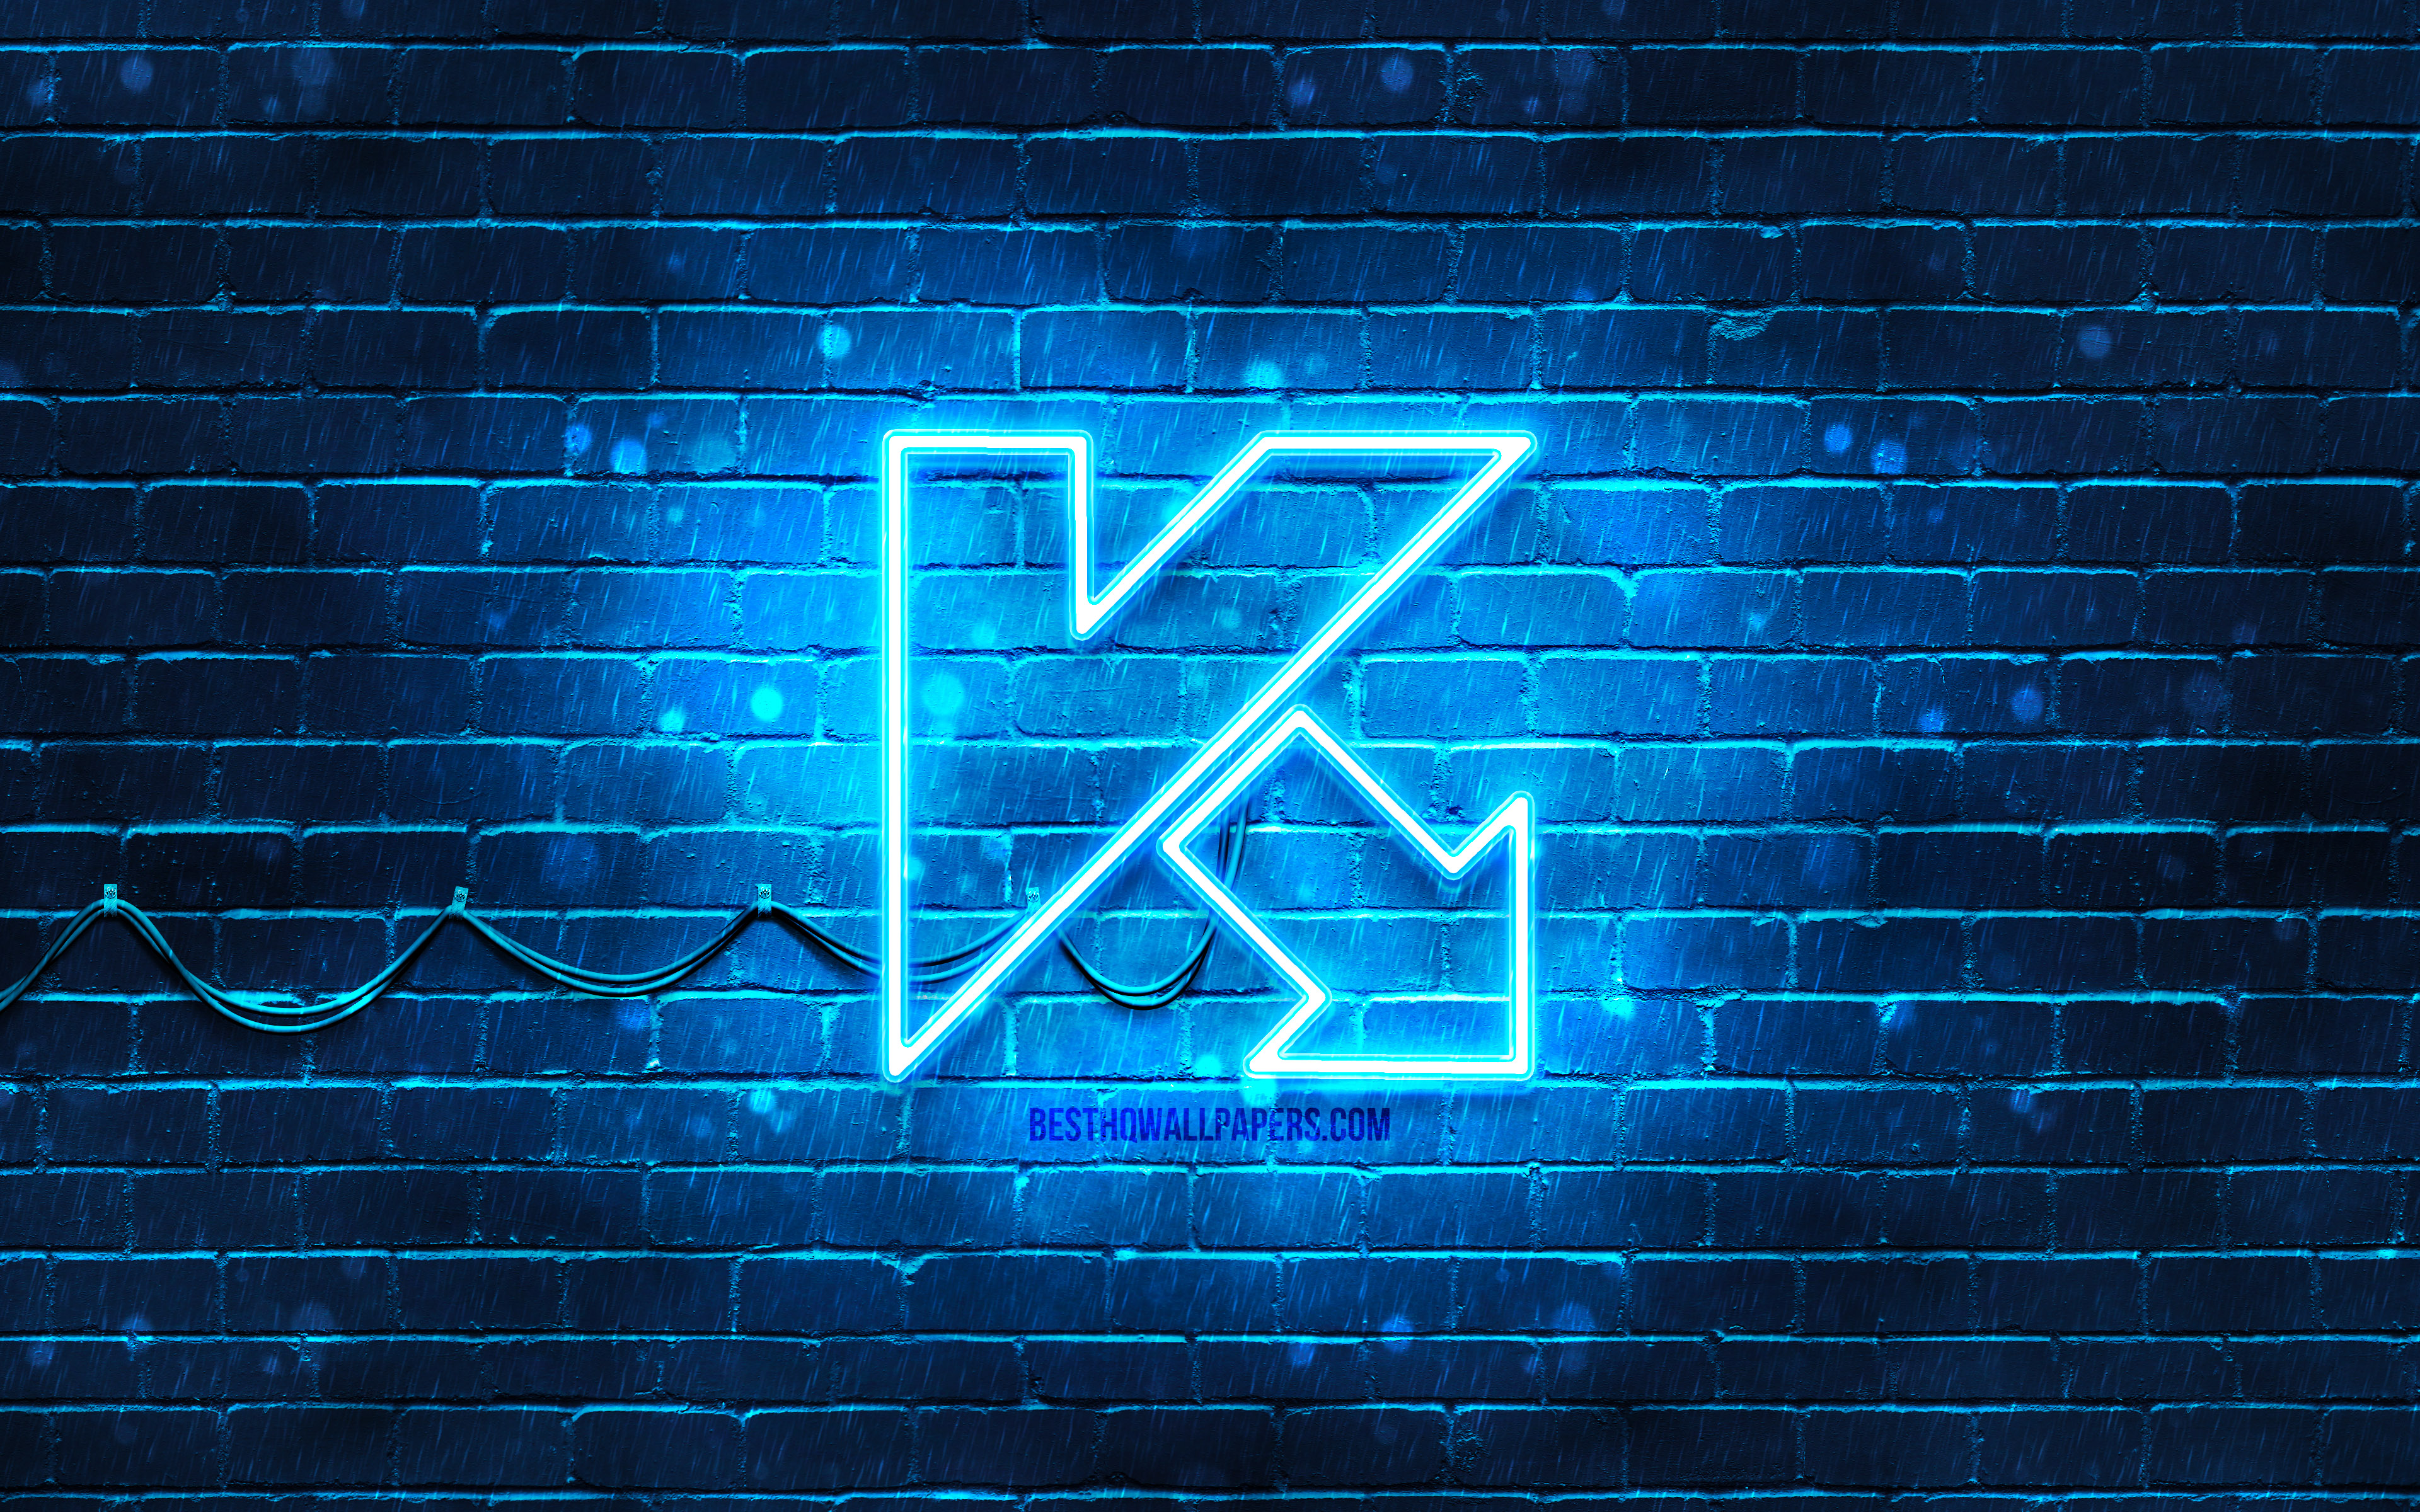 Download wallpaper Kaspersky blue logo, 4k, blue brickwall, Kaspersky logo, antivirus software, Kaspersky neon logo, Kaspersky for desktop with resolution 3840x2400. High Quality HD picture wallpaper